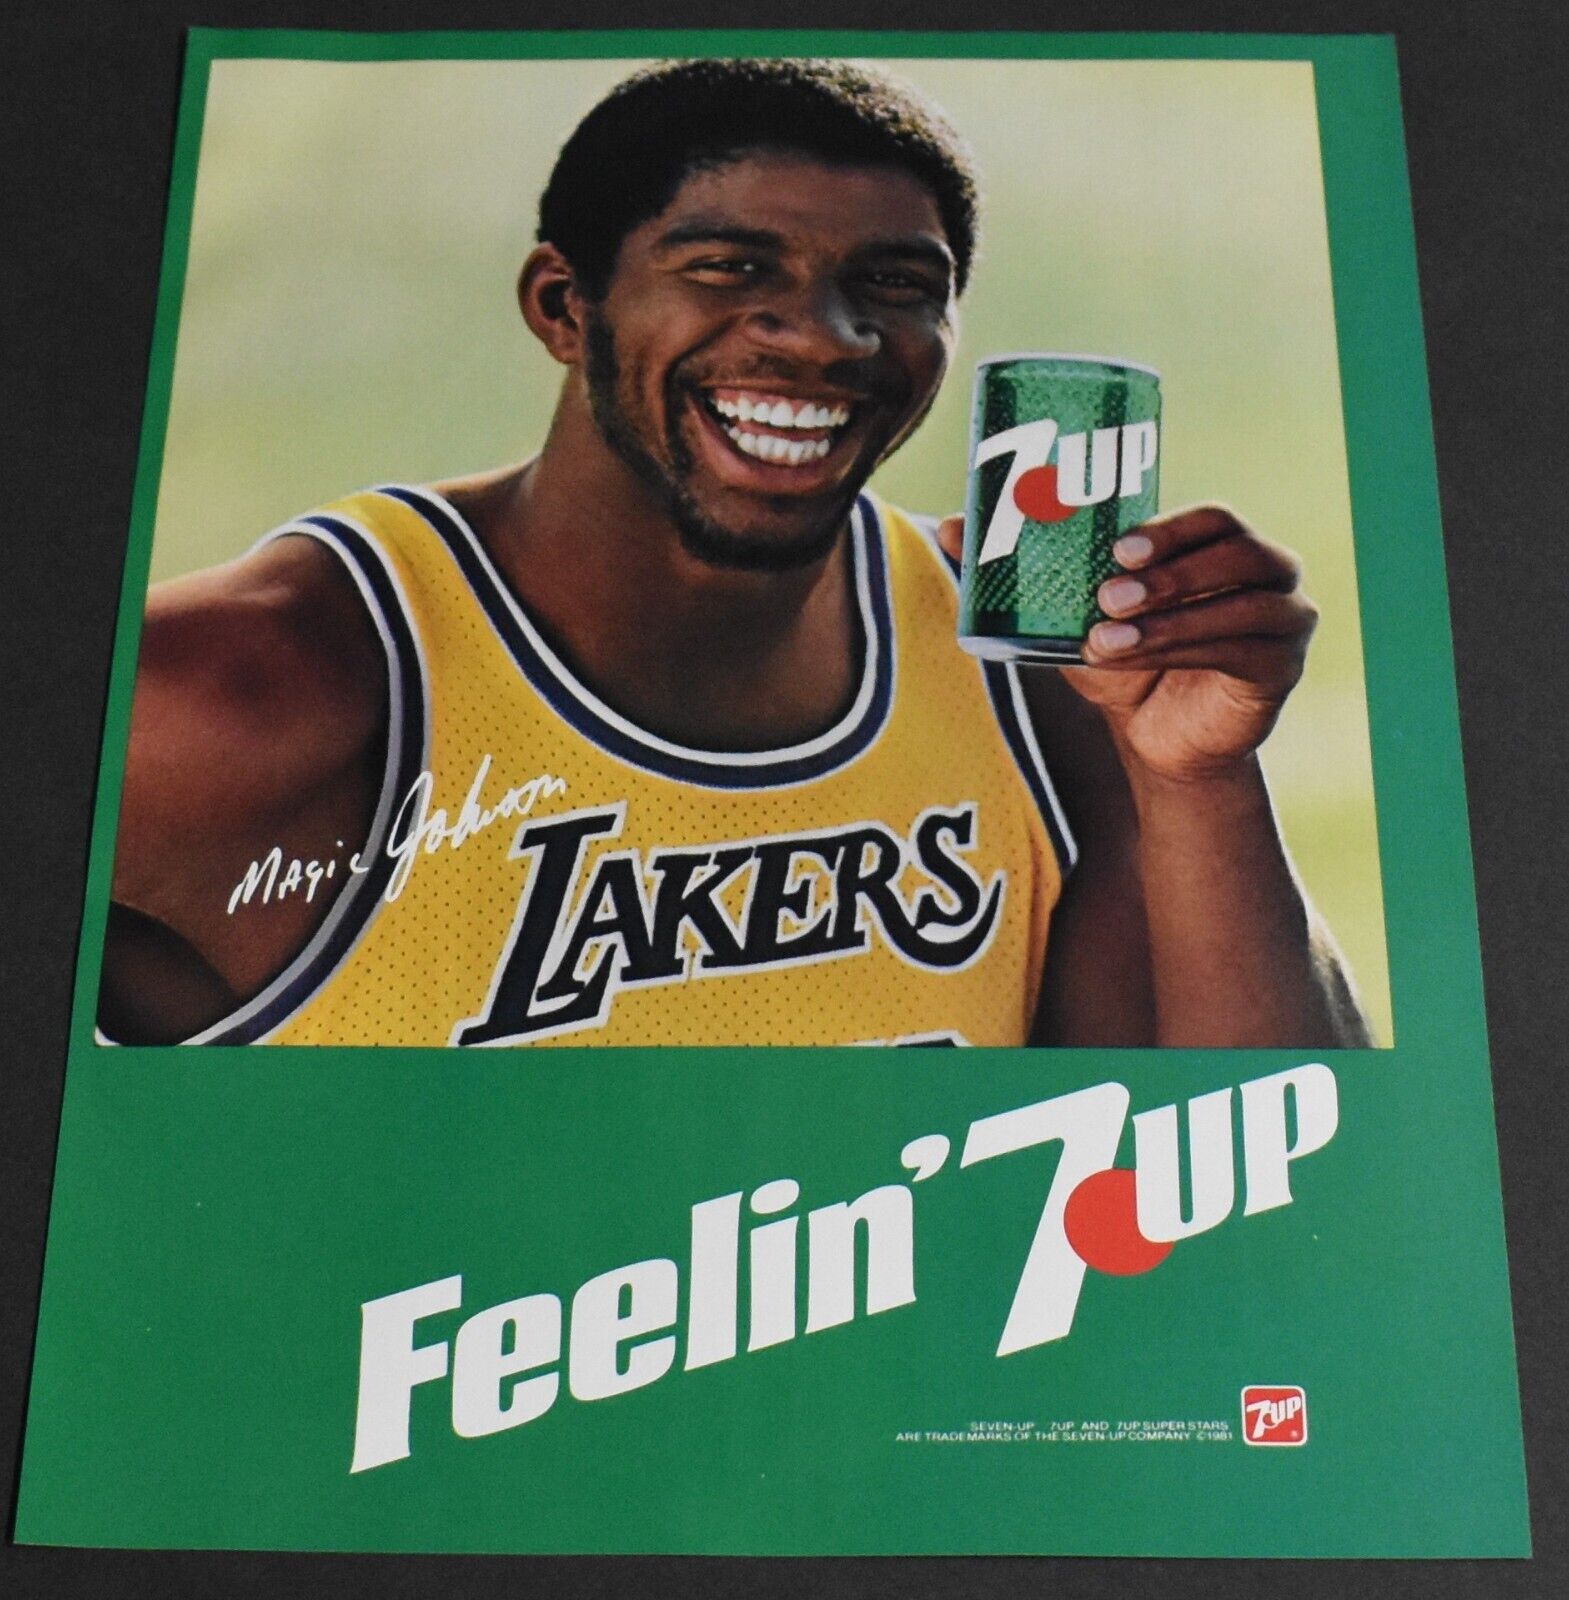 1982 Print Ad Magic Johnson NBA Basketball Los Angeles Lakers 7up Soda Pop art